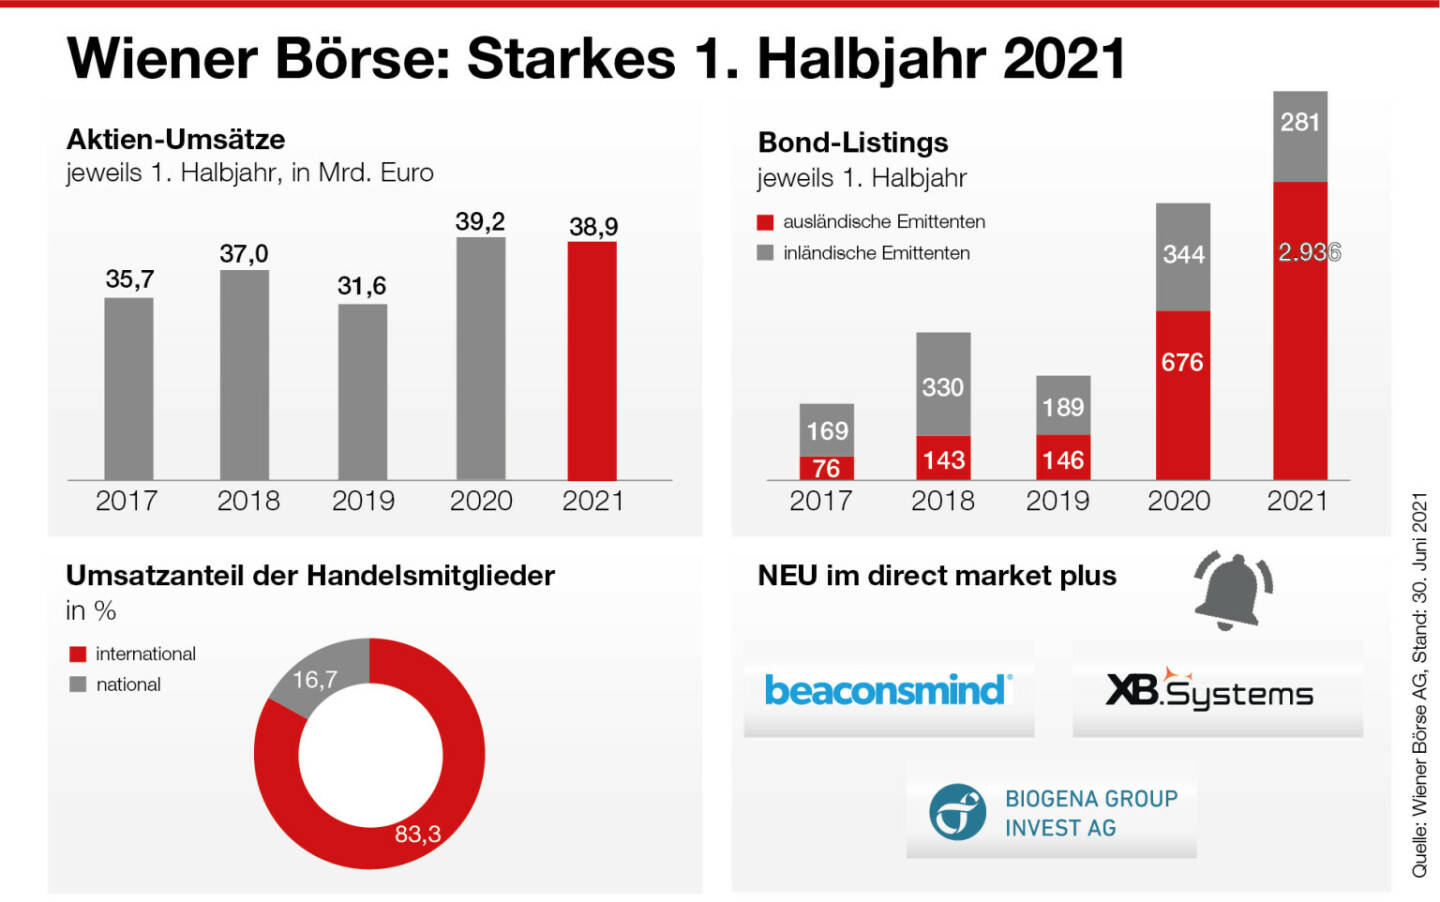 Wiener Börse, Statistik 1. Halbjahr, Credit: Wiener Börse